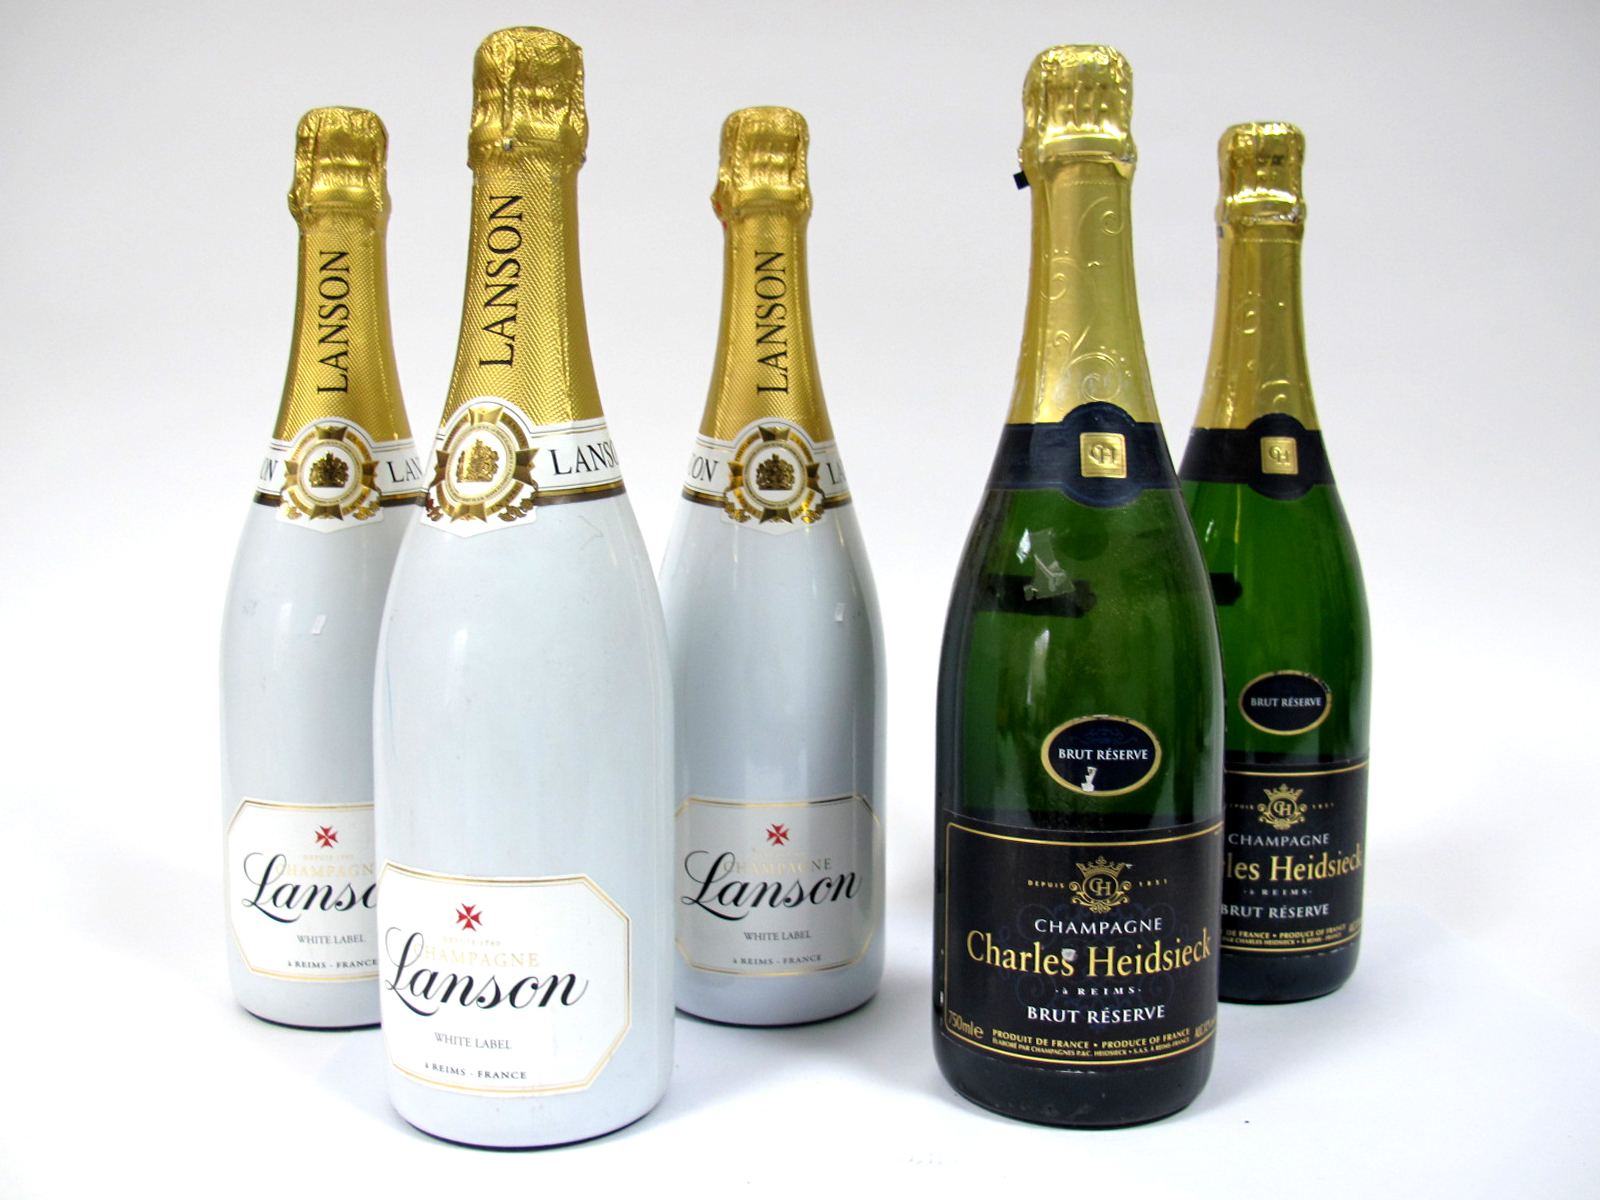 Champagne - Lanson White Label Champagne, 75cl, 12.5% Vol, three bottles; Charles Heidsieck Brut